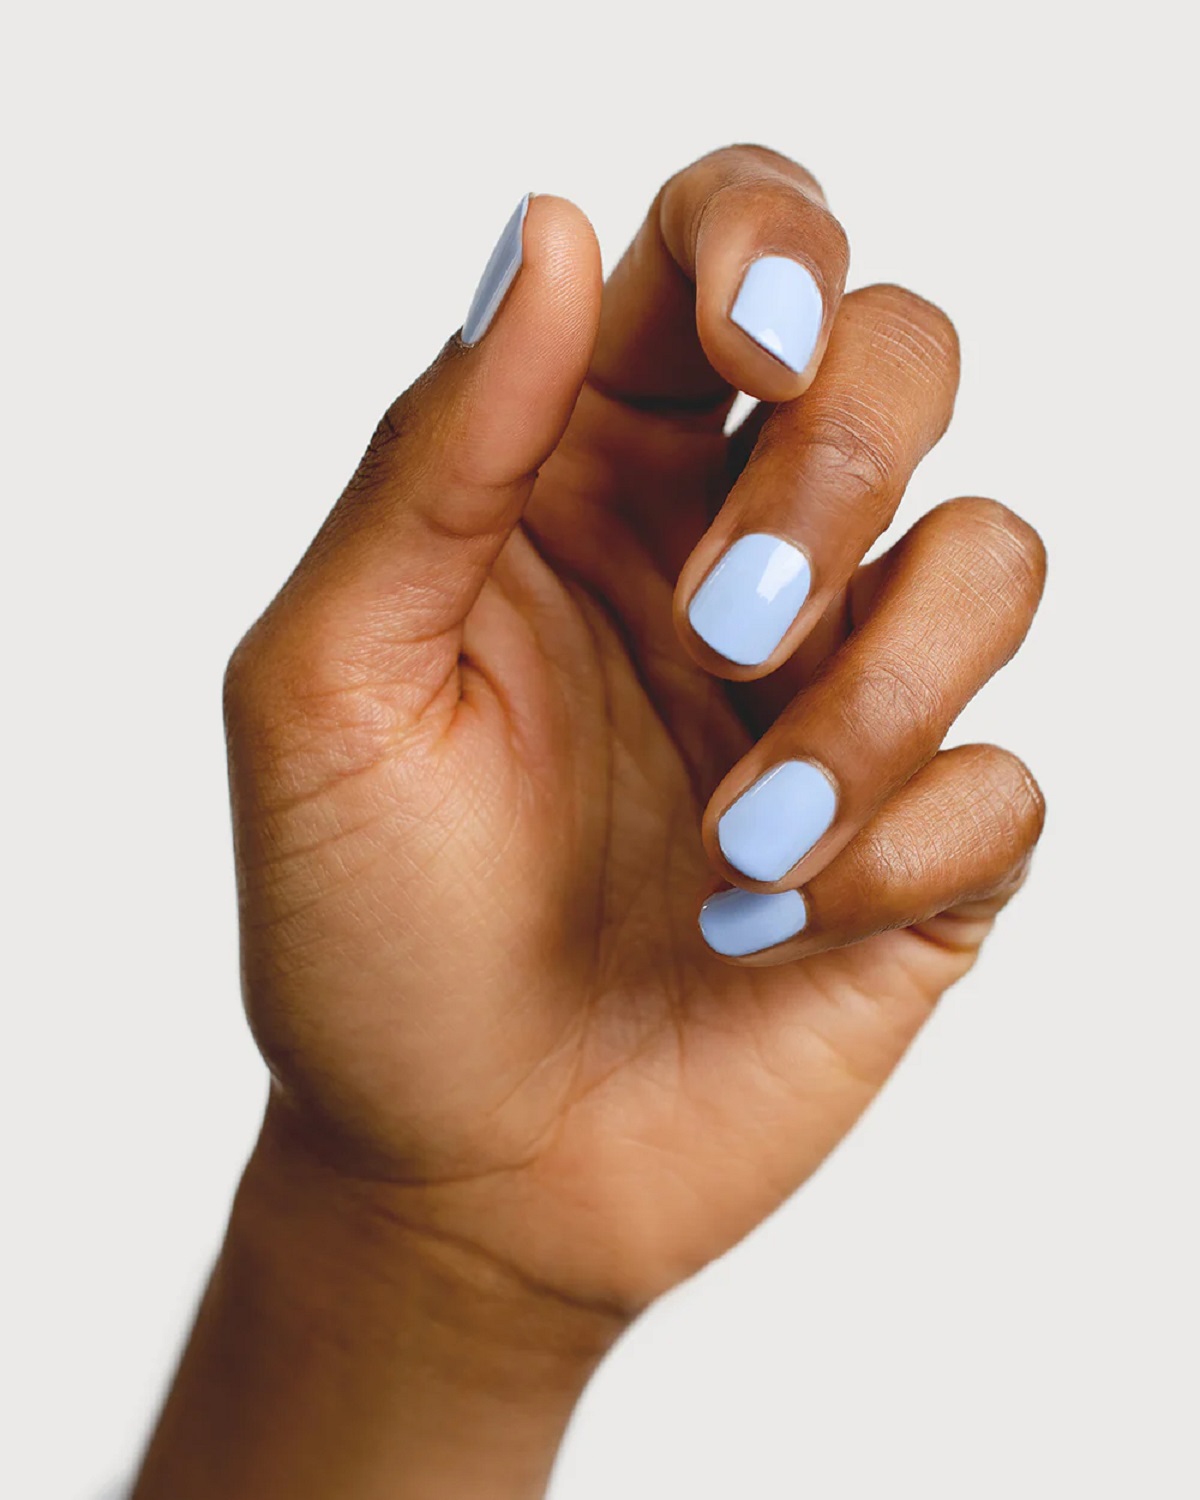 Sky Blue nail color